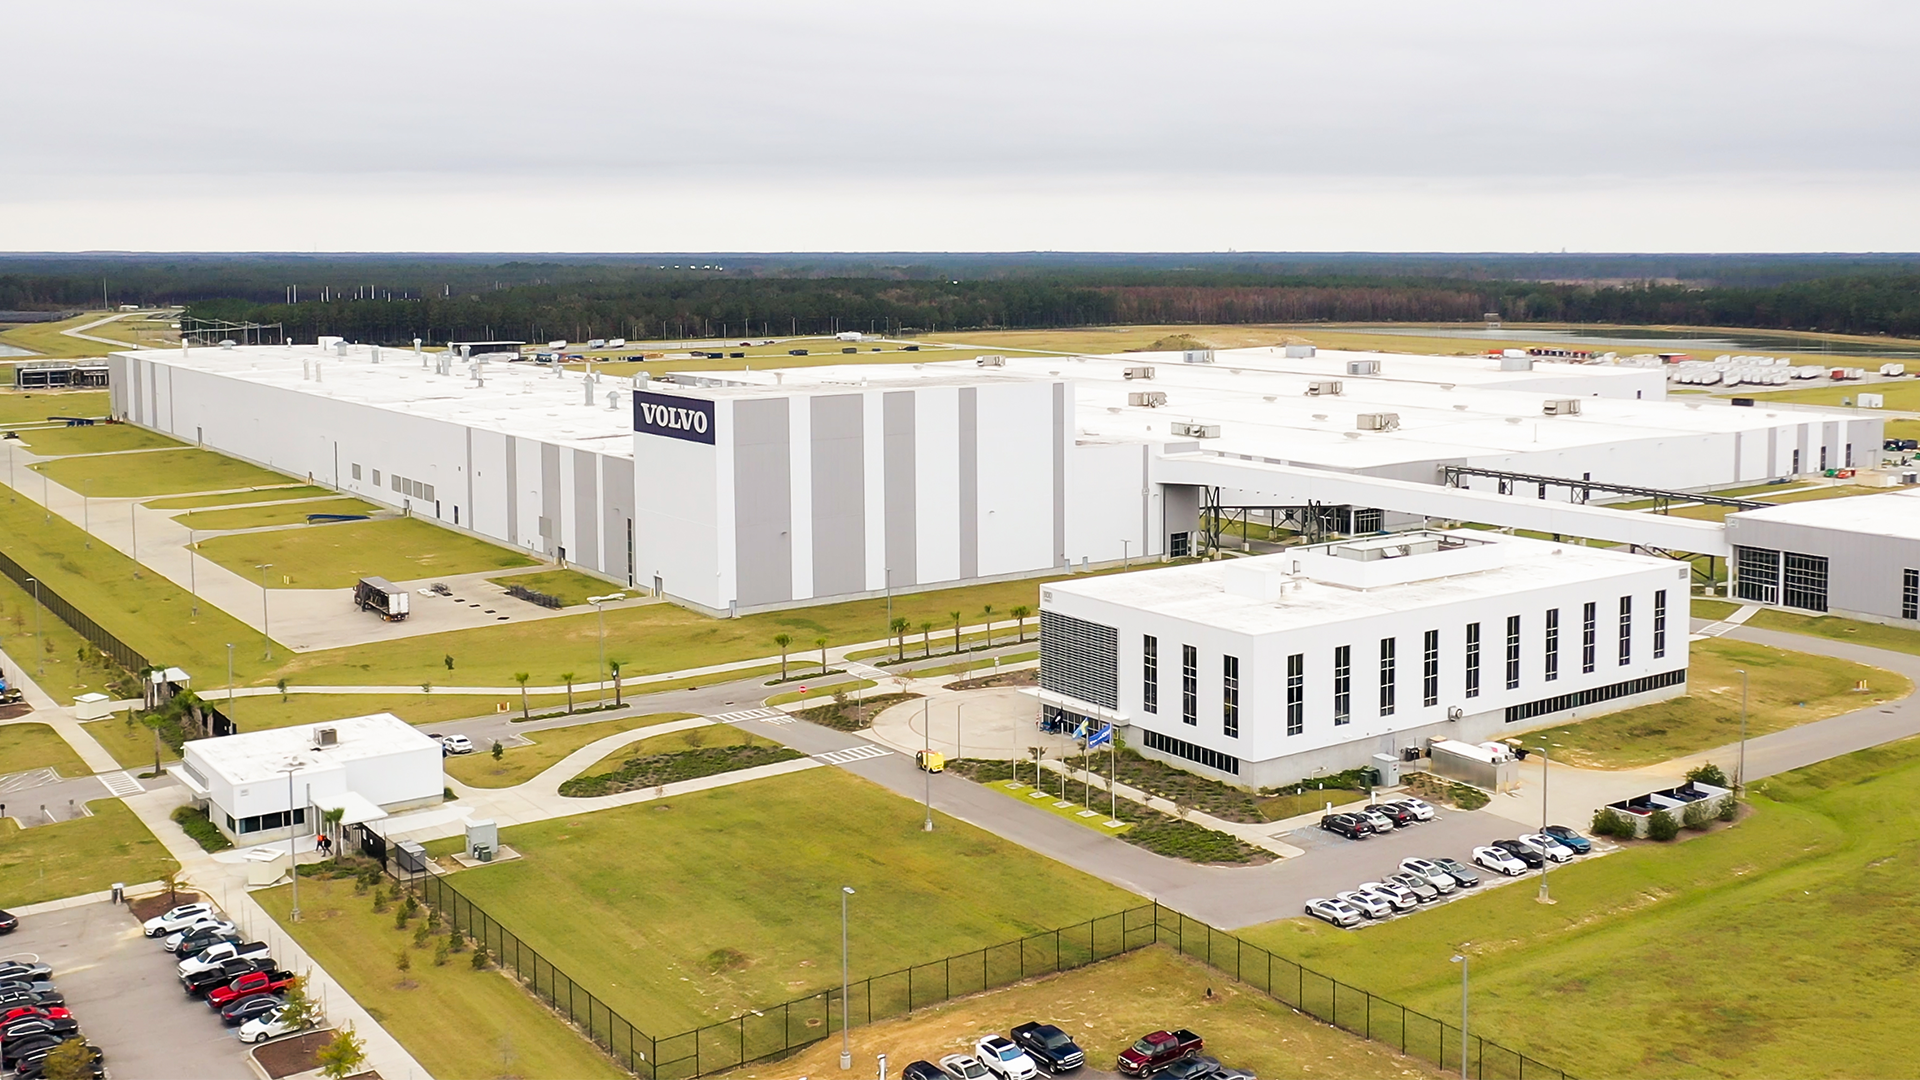 Aerial image of the South Carolina Volvo production facility